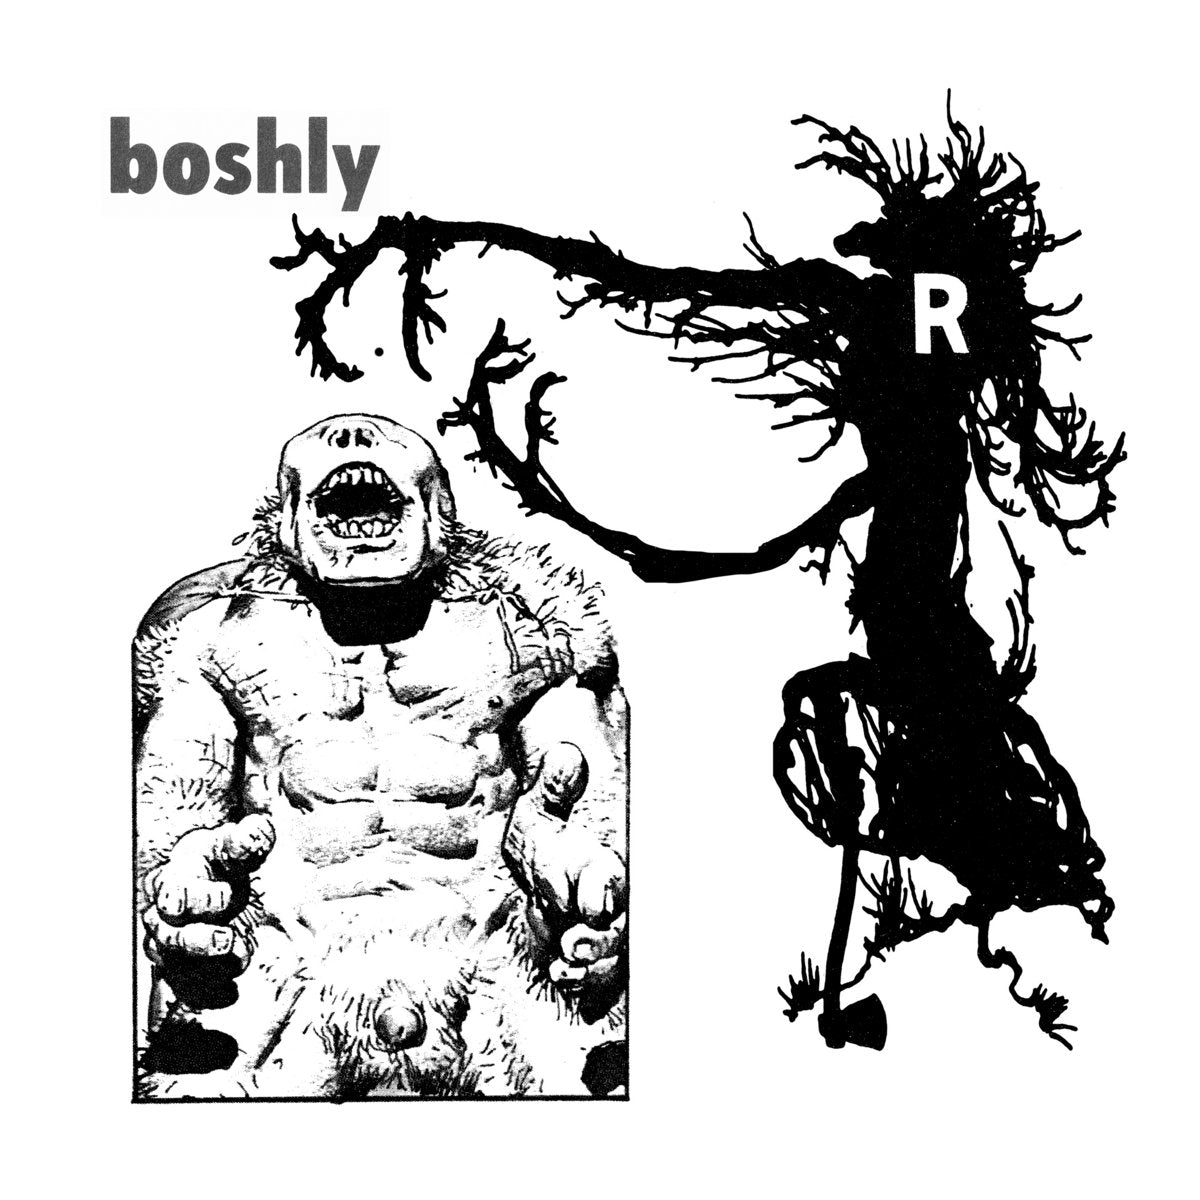 Boshly (12")